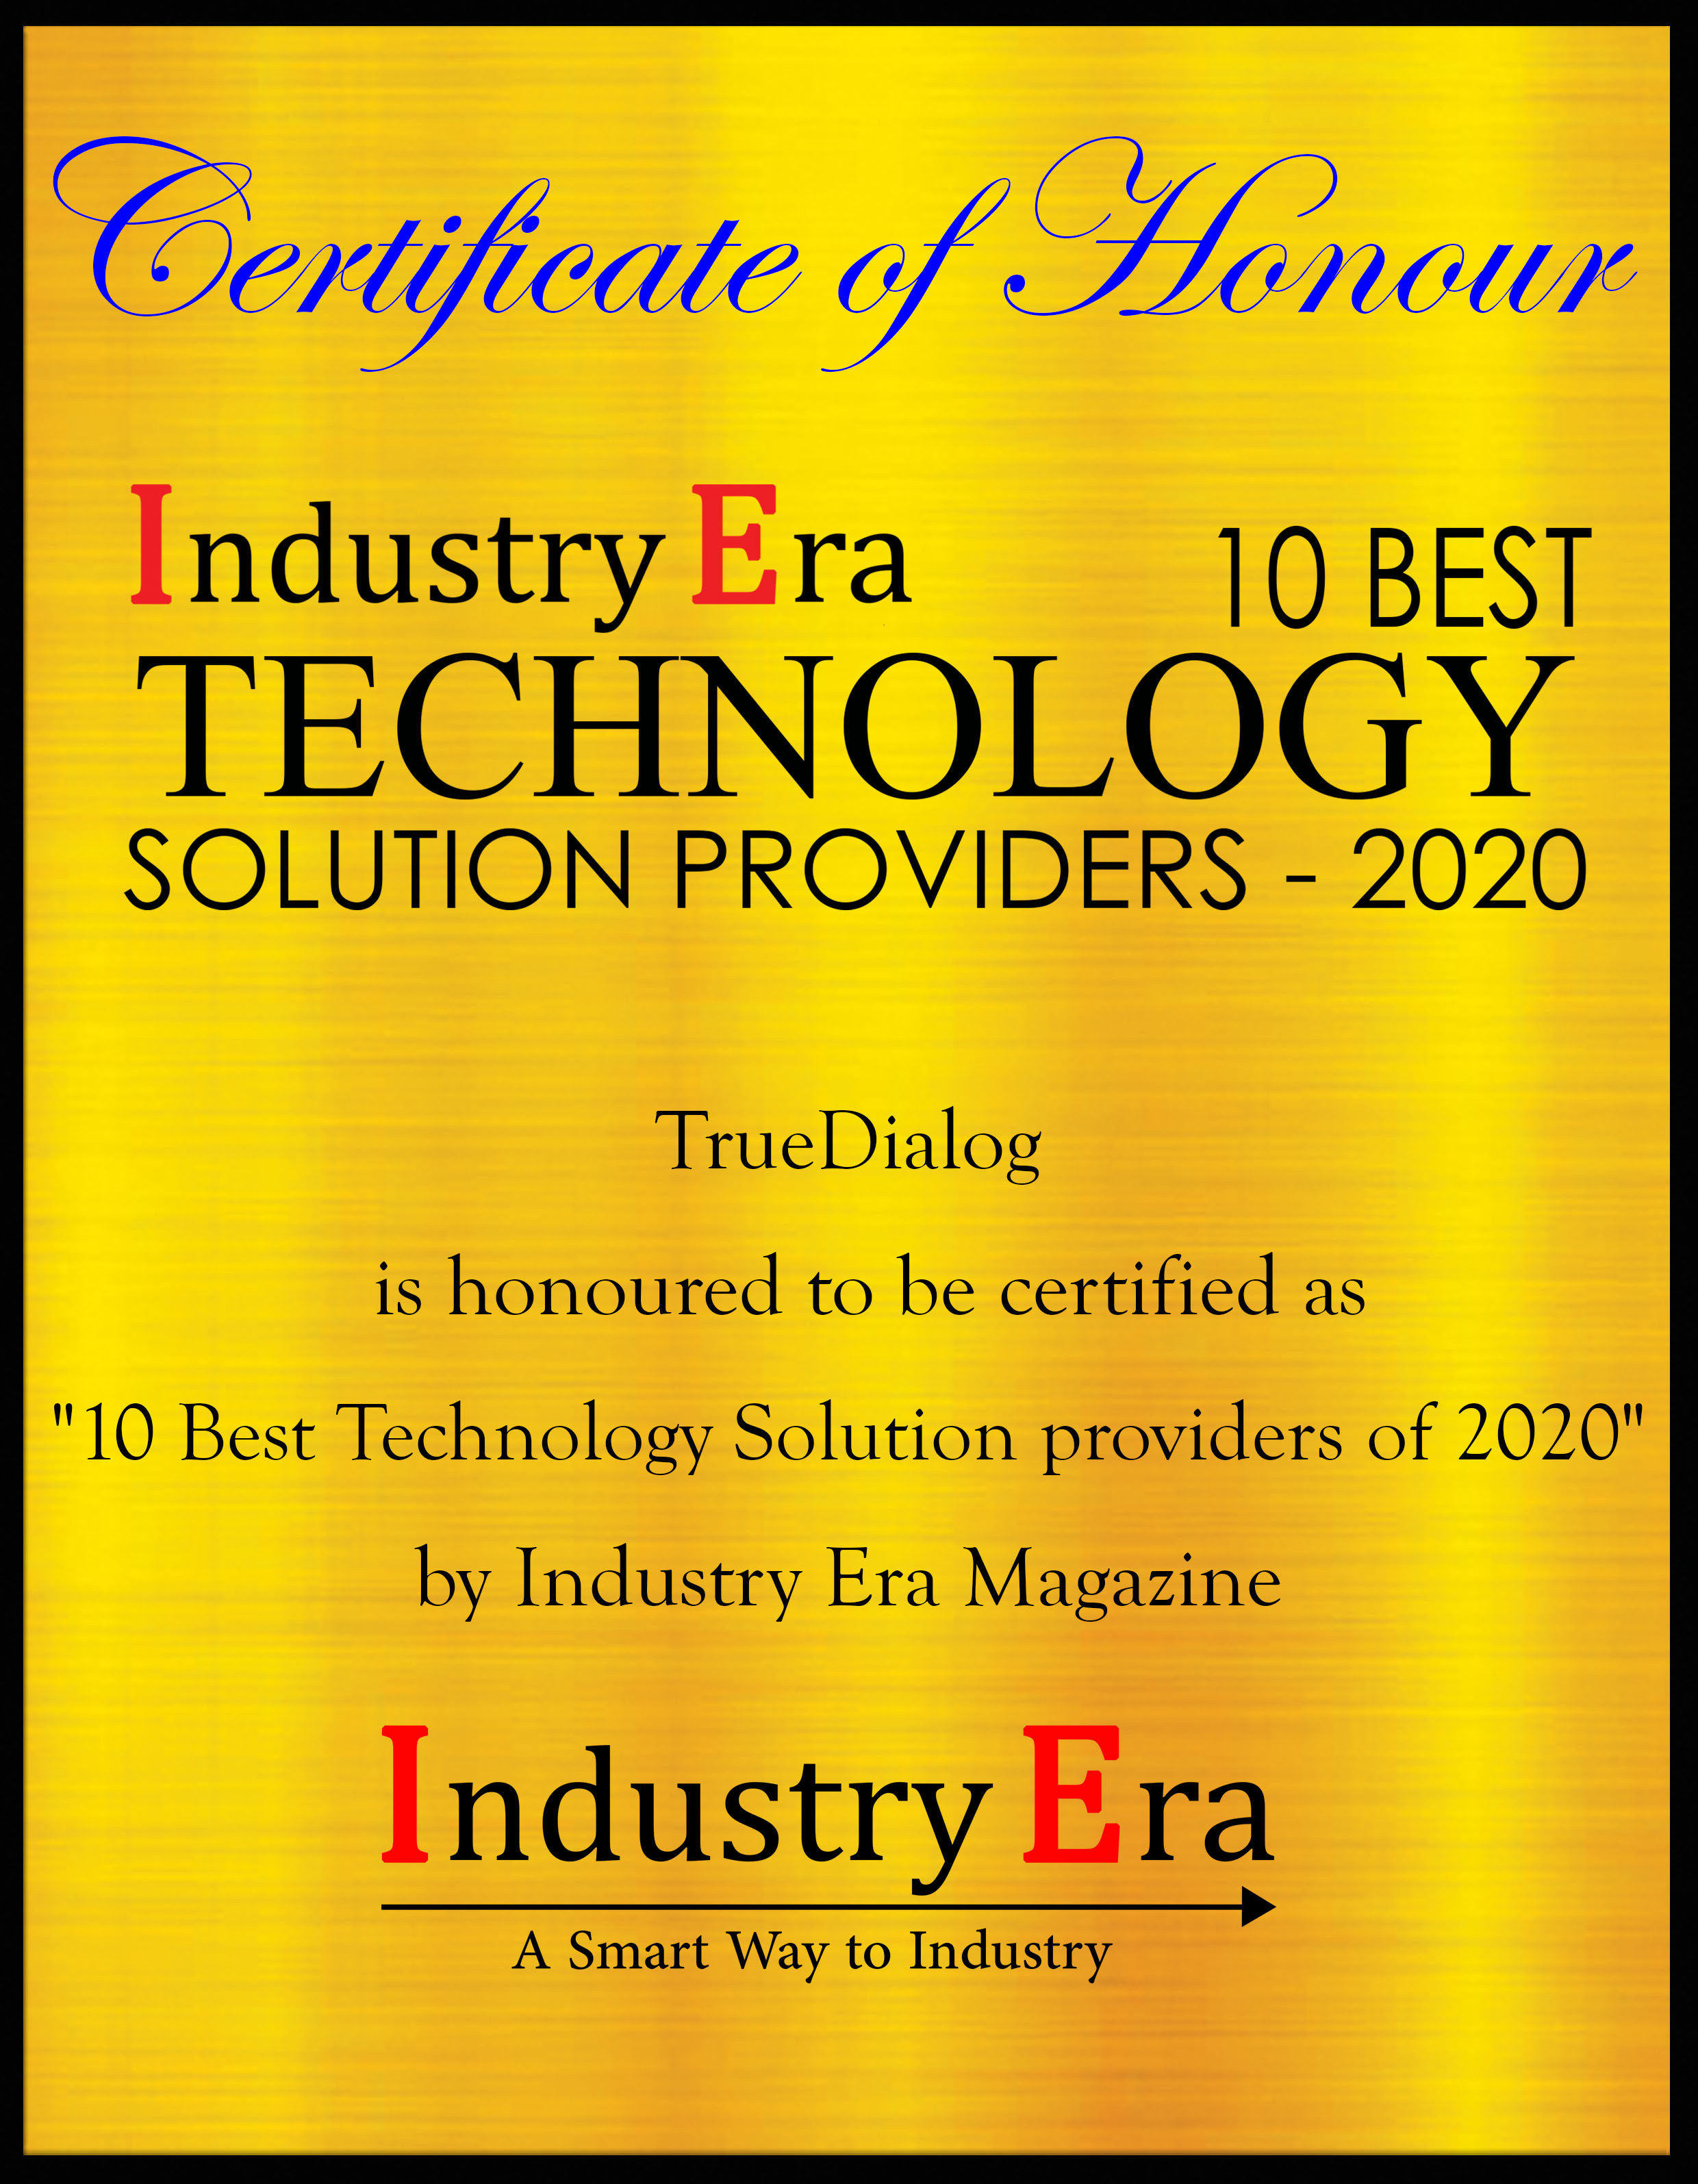 John-Wright CEO TrueDialog Certificate